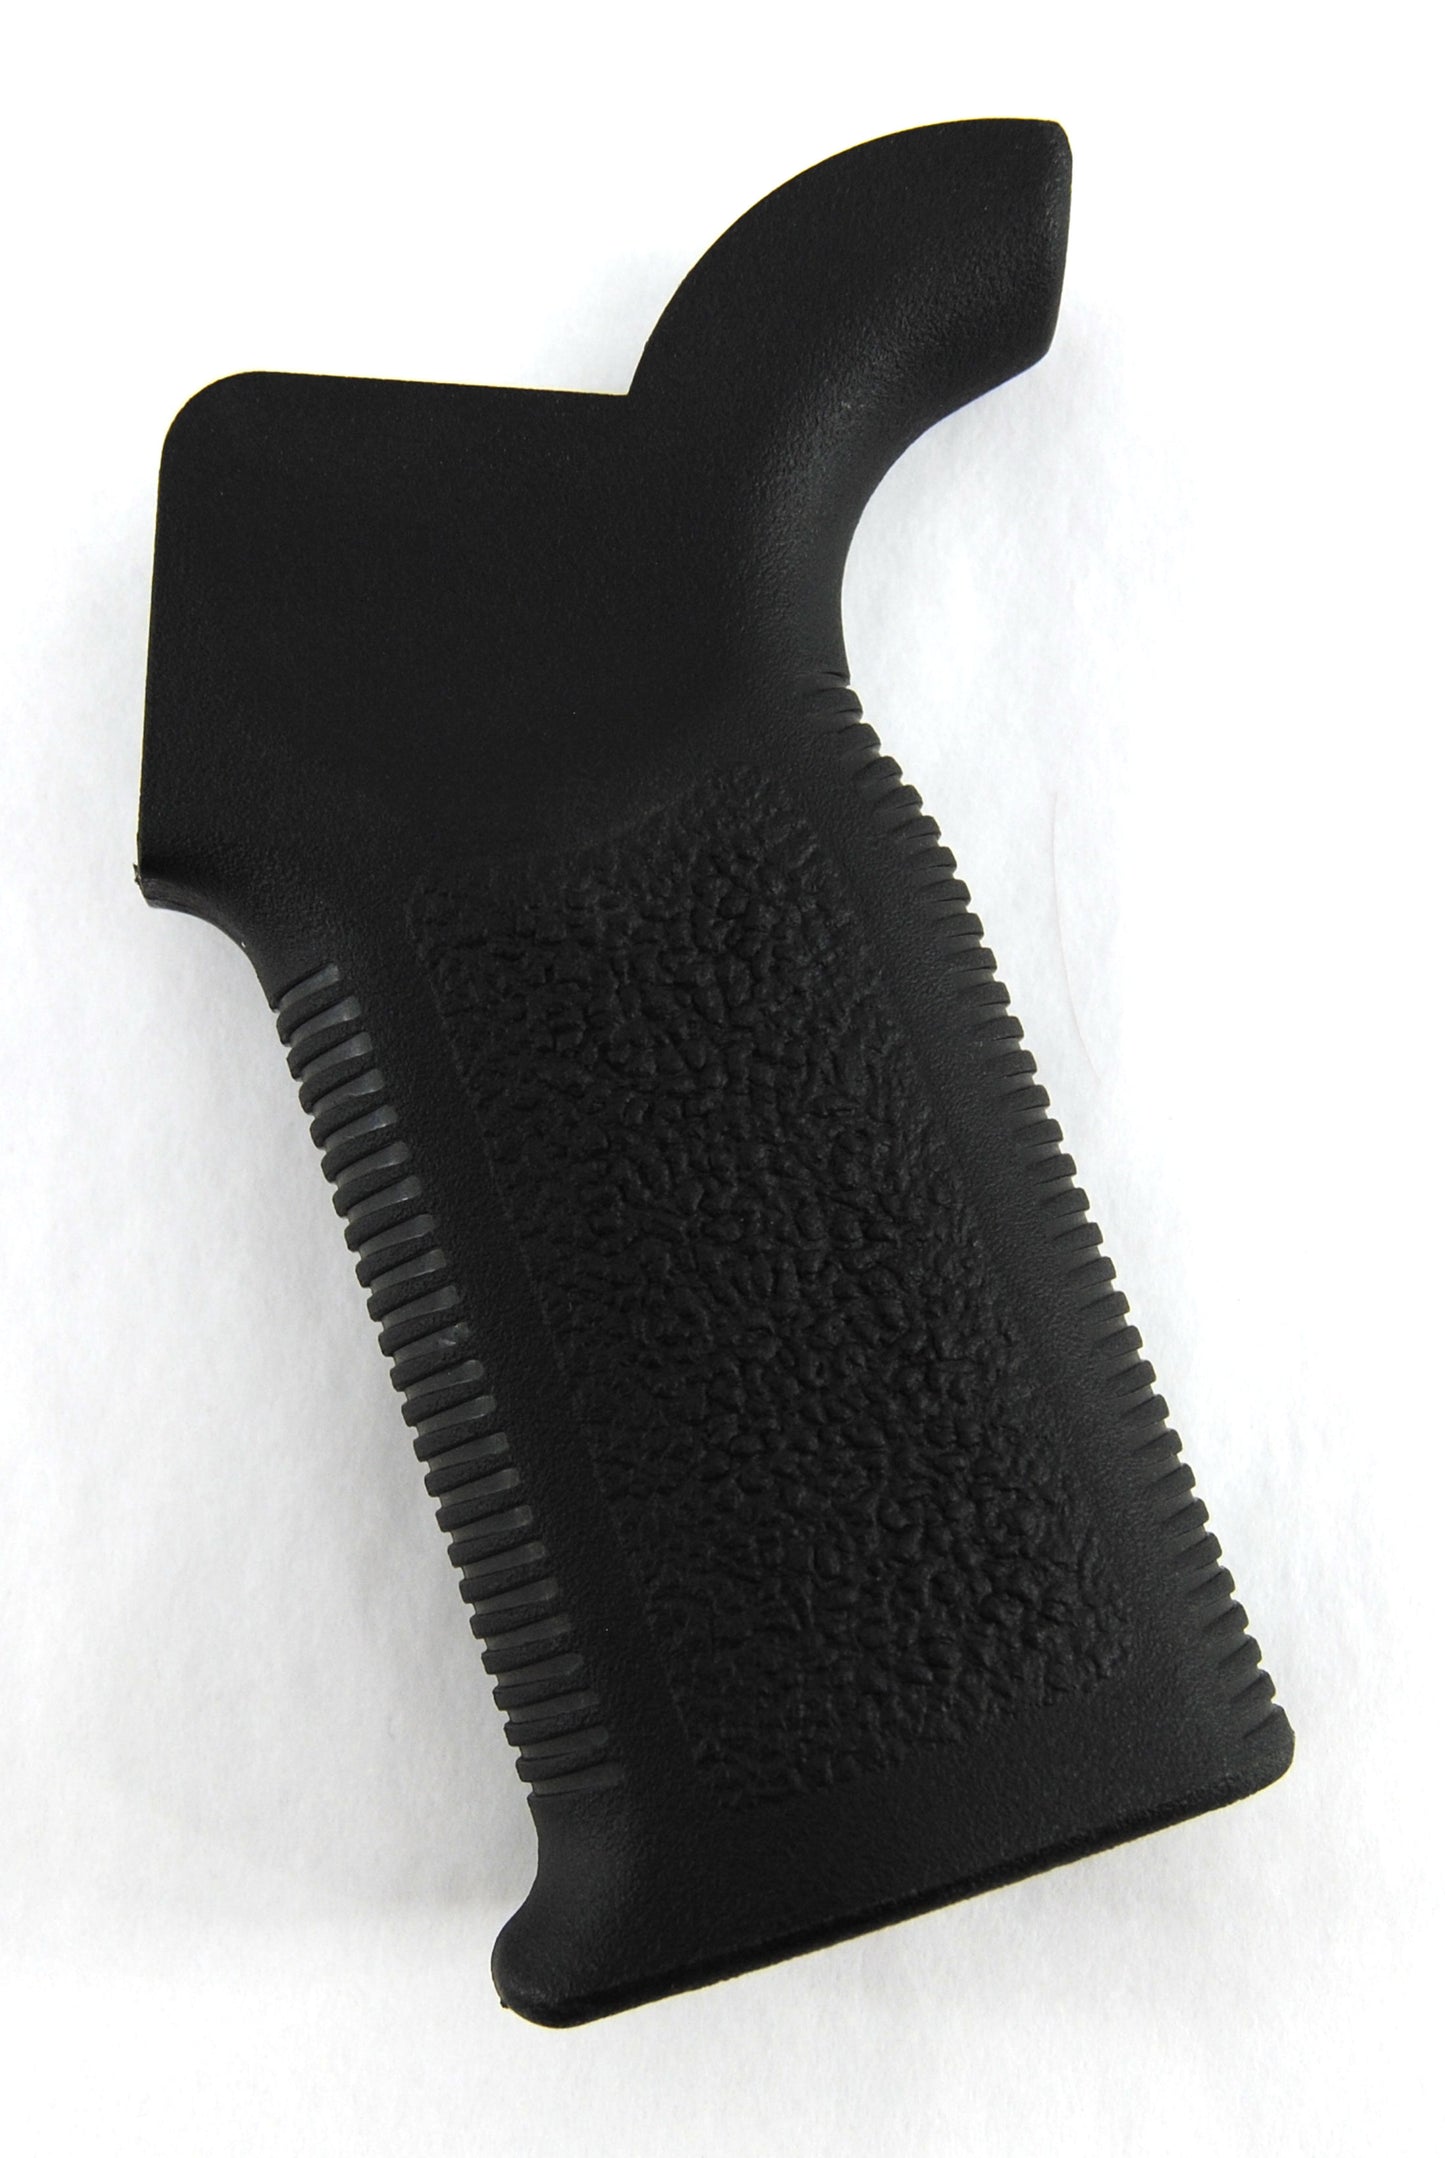 Tippmann Airsoft M4 Pistol Grip Upgrade - Black - Tippmann Sports